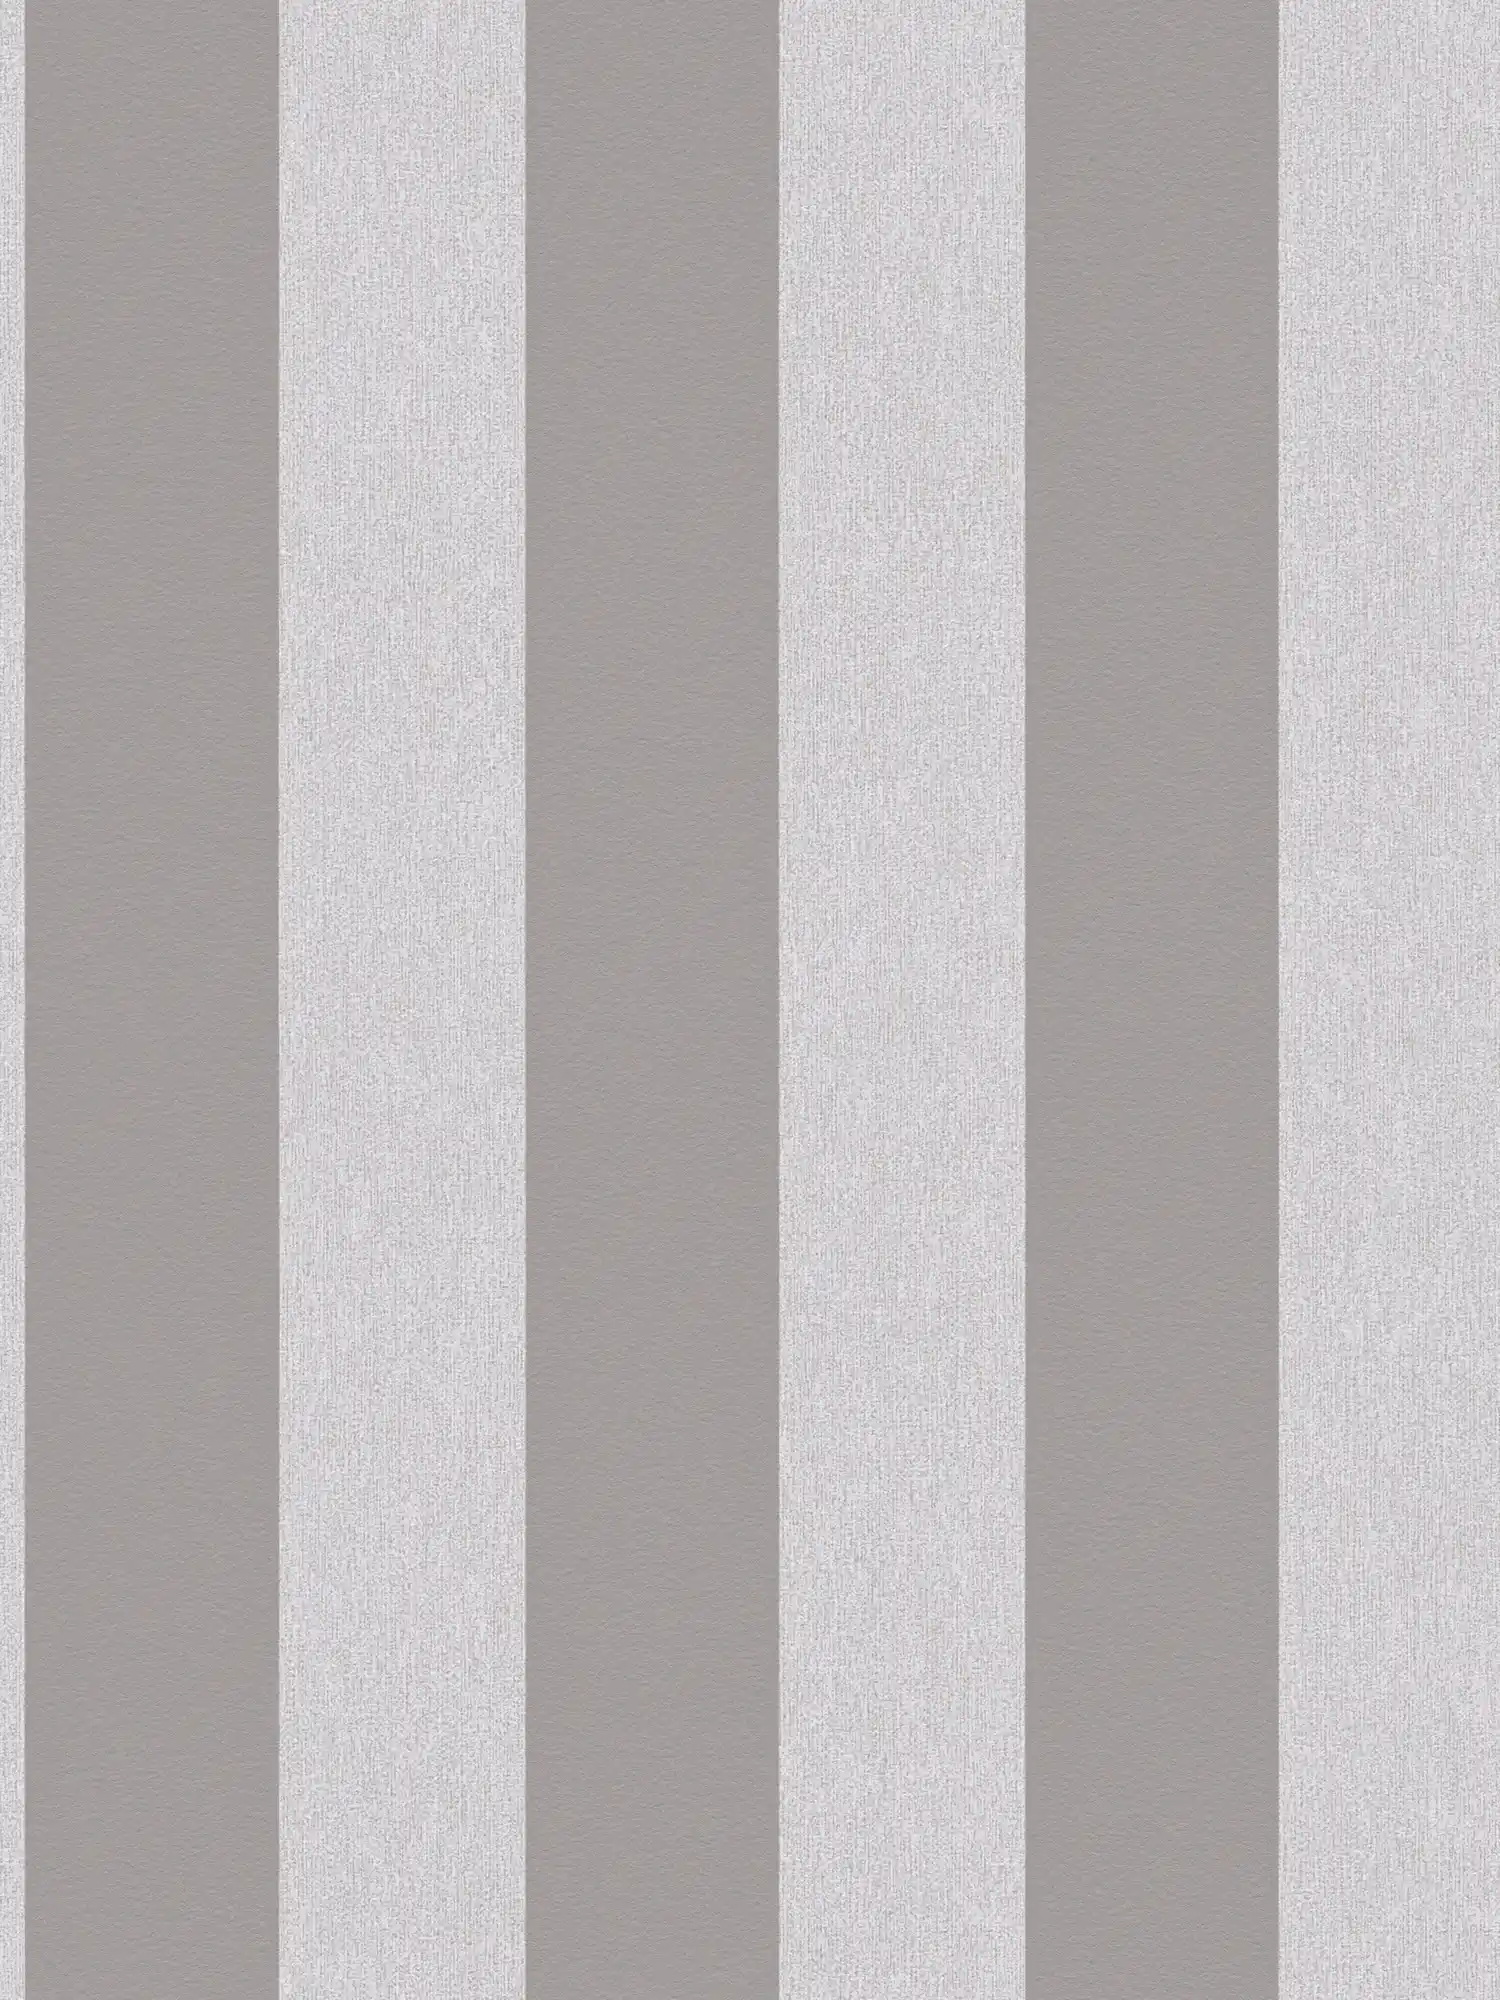 Wallpaper with textured optics & stripes pattern - grey, light grey
